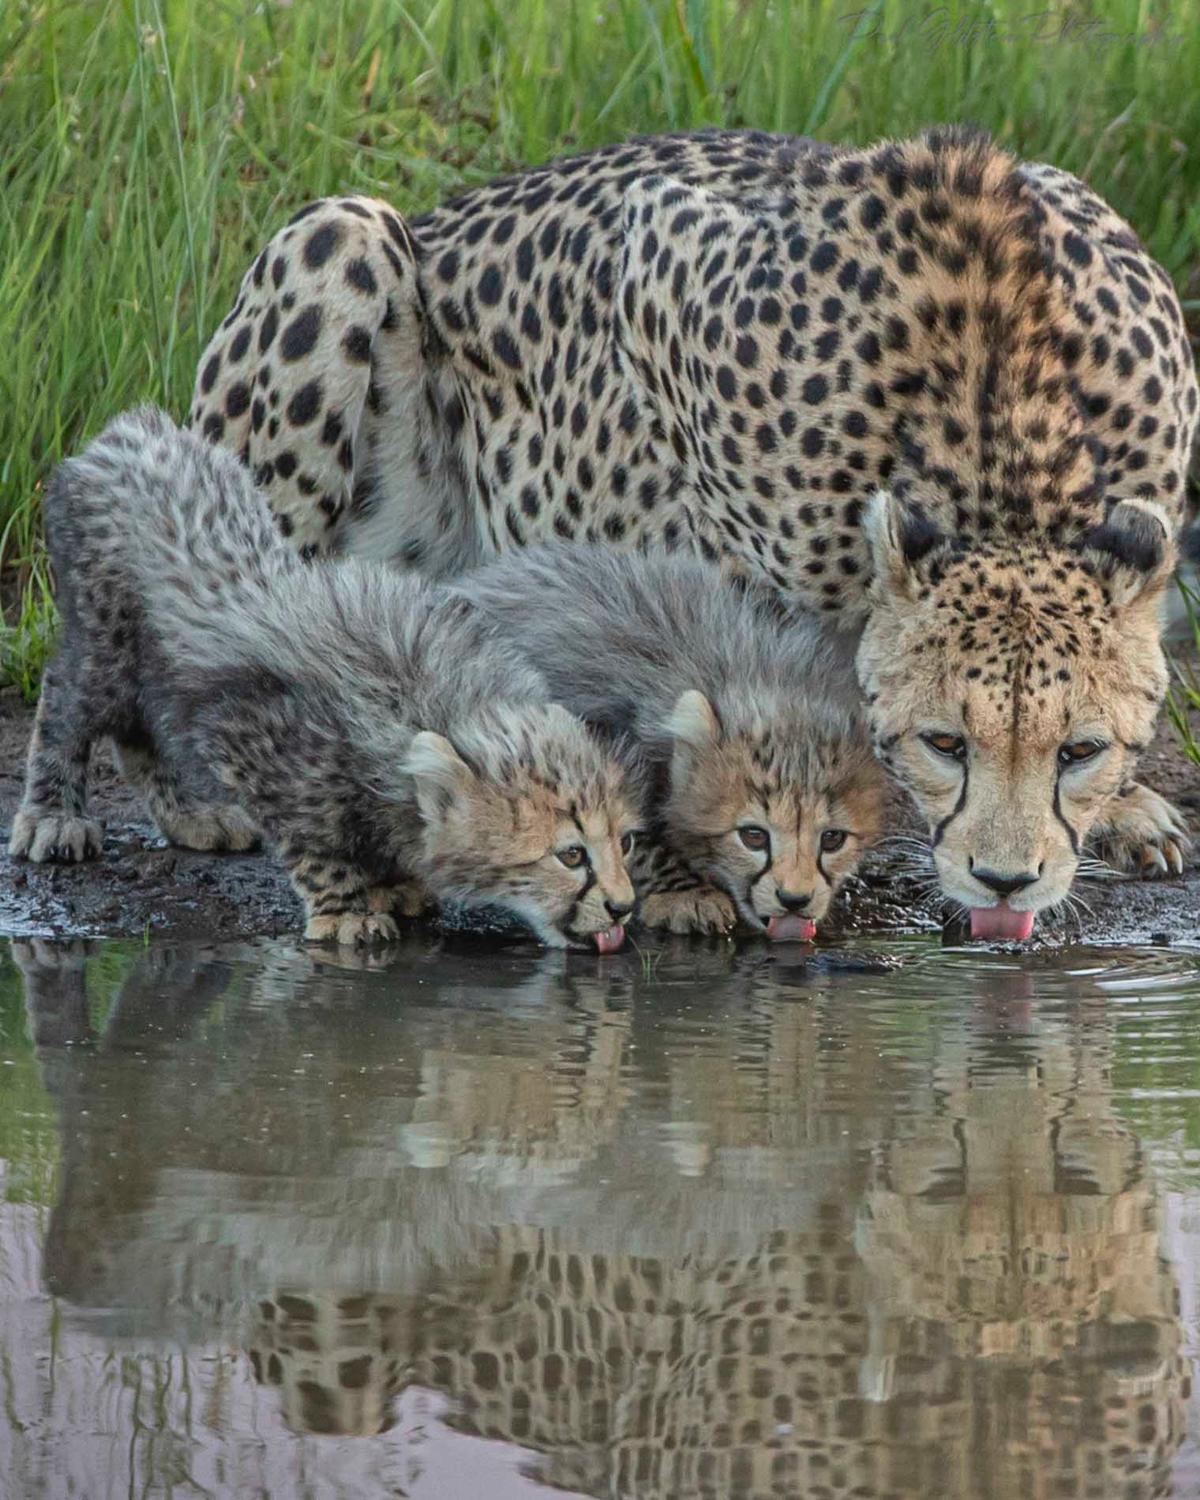 A cheetah family drinks in Olare Conservancy, Kenya. (Courtesy of <a href="https://www.instagram.com/paulsgoldstein/">Paul Goldstein</a>)